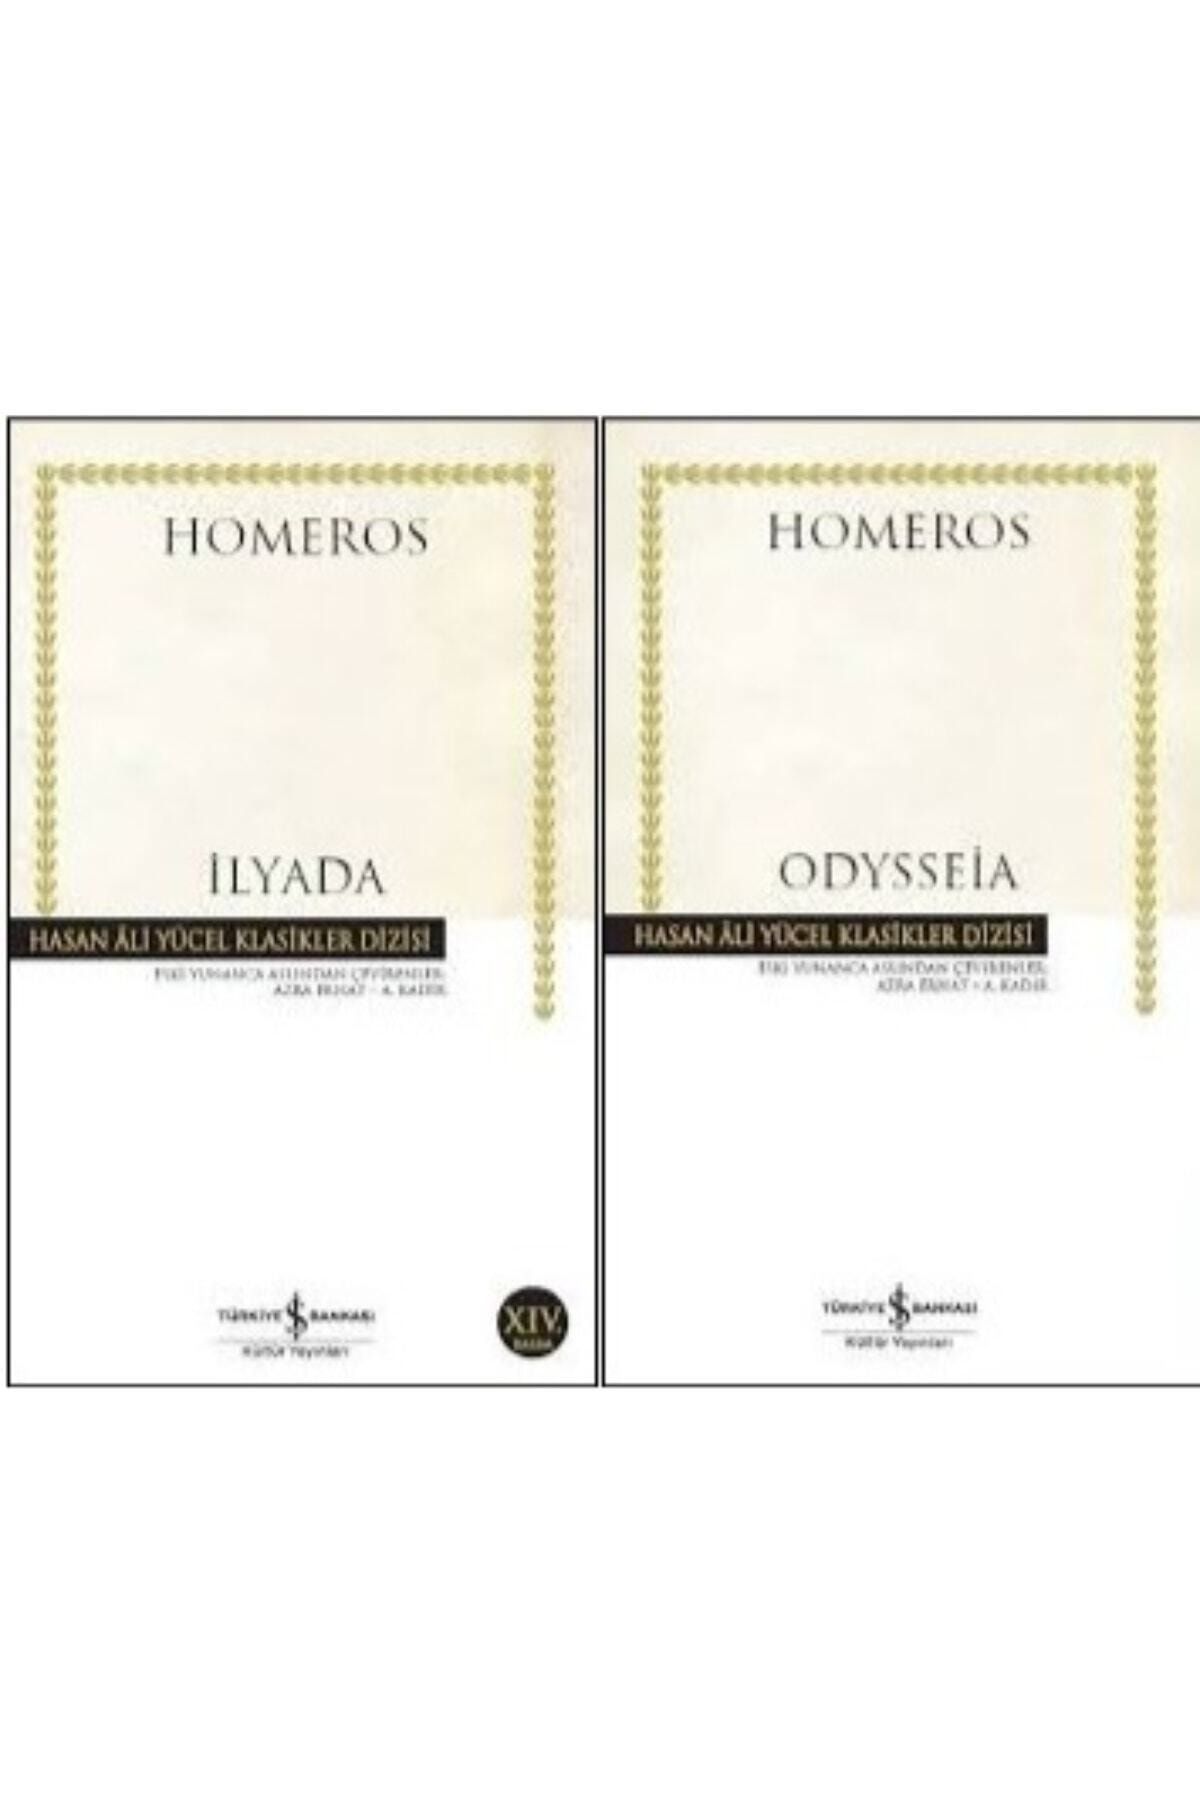 Türkiye İş Bankası Kültür Yayınları Homeros 2 Kitap Set Yunan Mitolojisi Ilyada - Odysseia